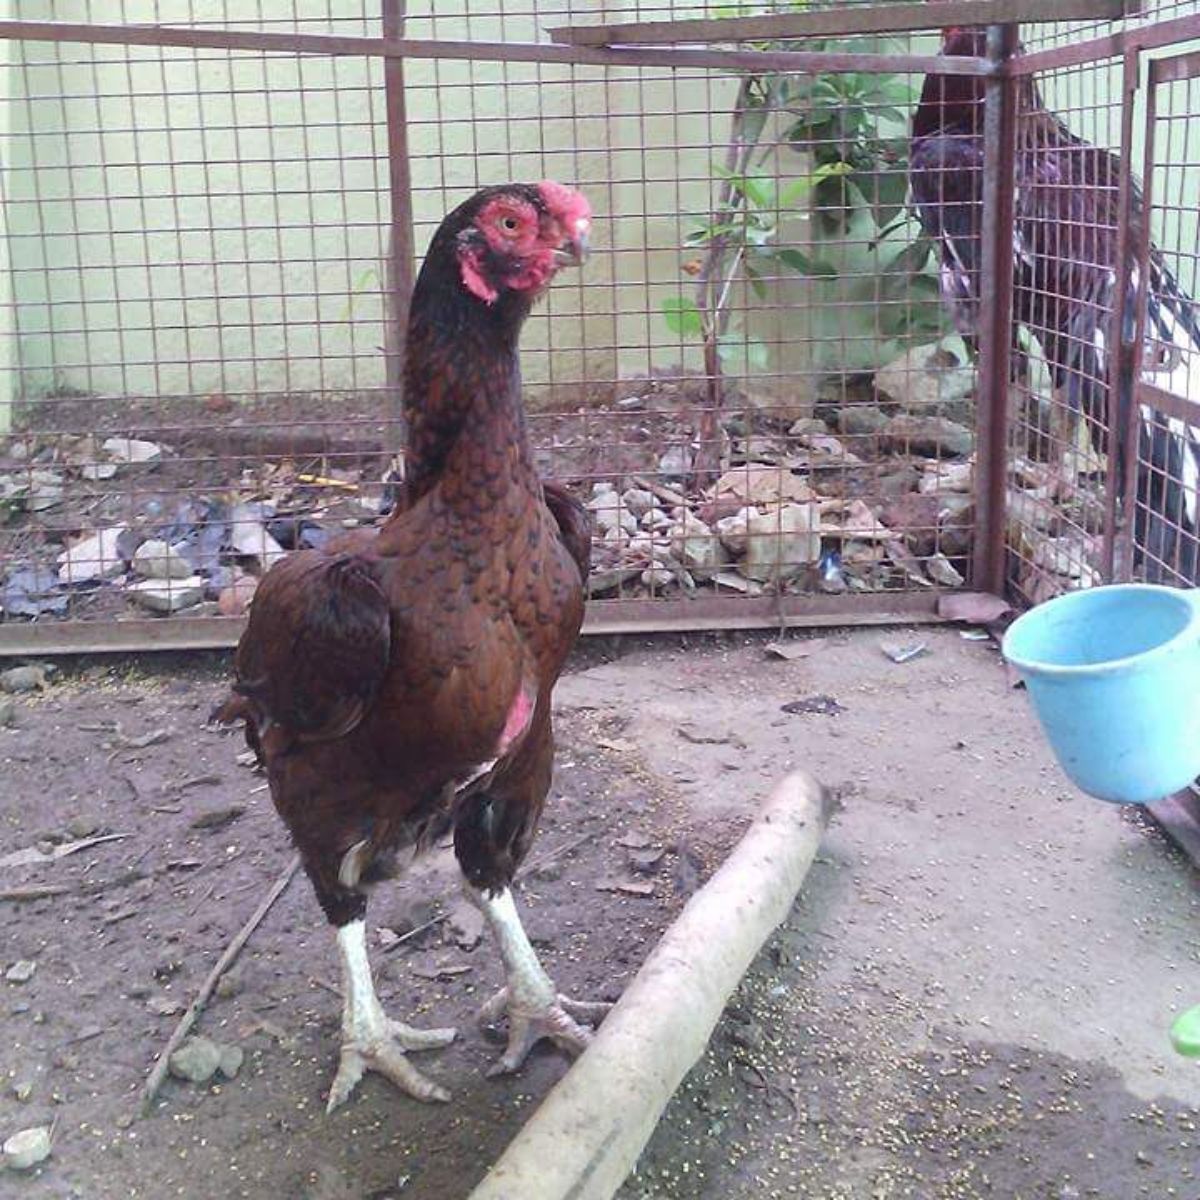 An adorable brown Asil chicken in a backyard.